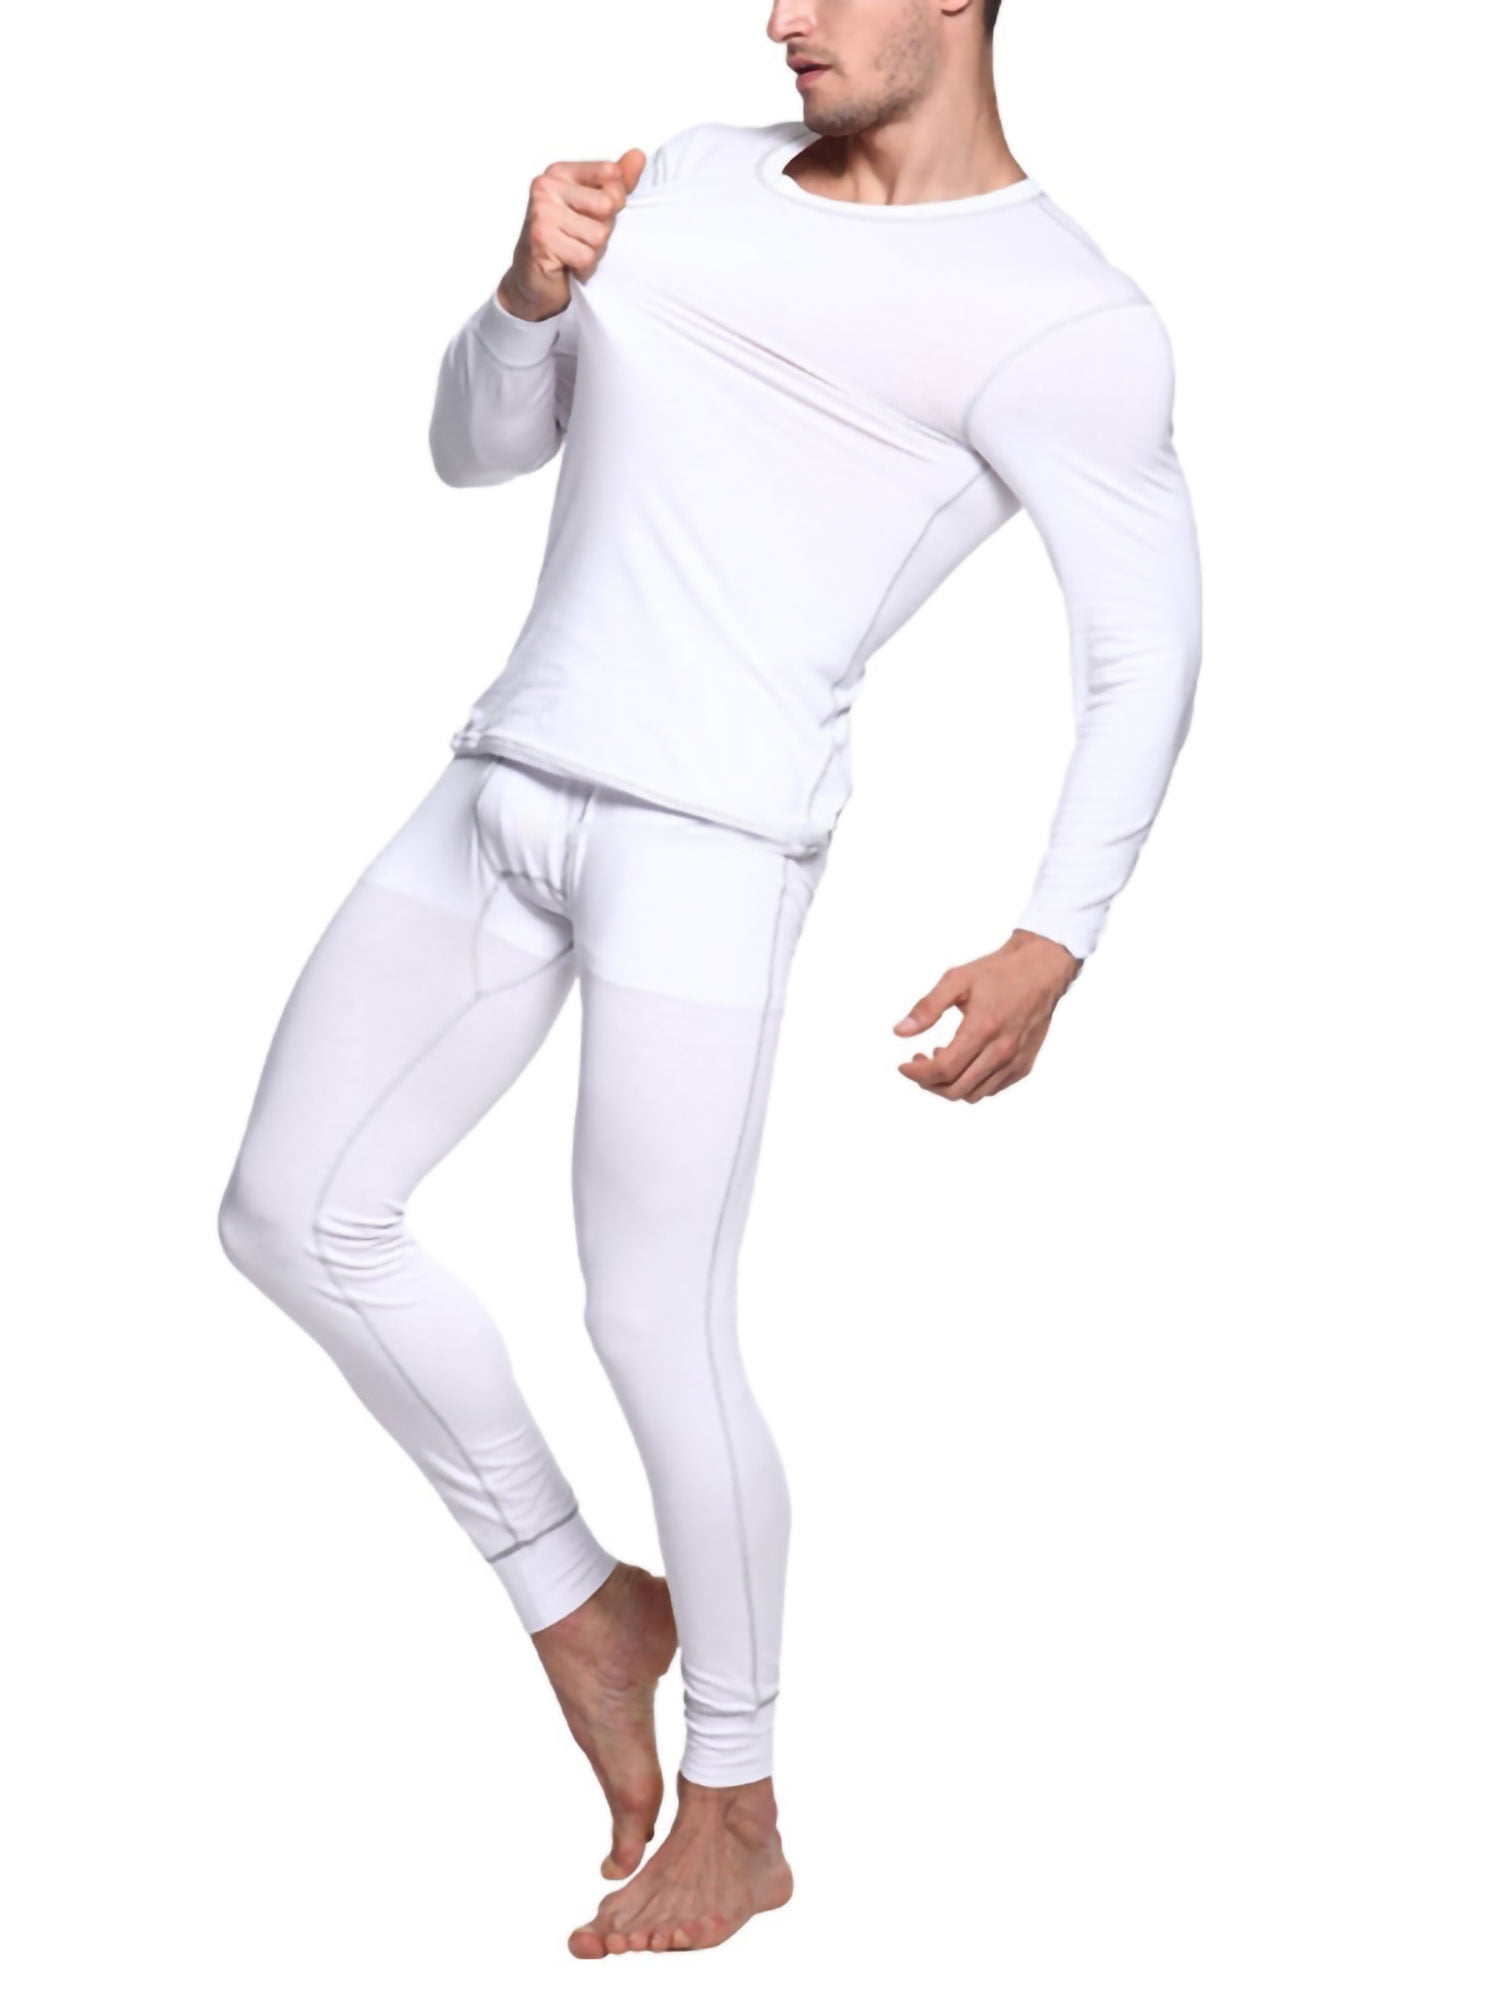 KidCo Mens Thermal Underwear Set Long Sleeve Vest & Long John Baselayer 